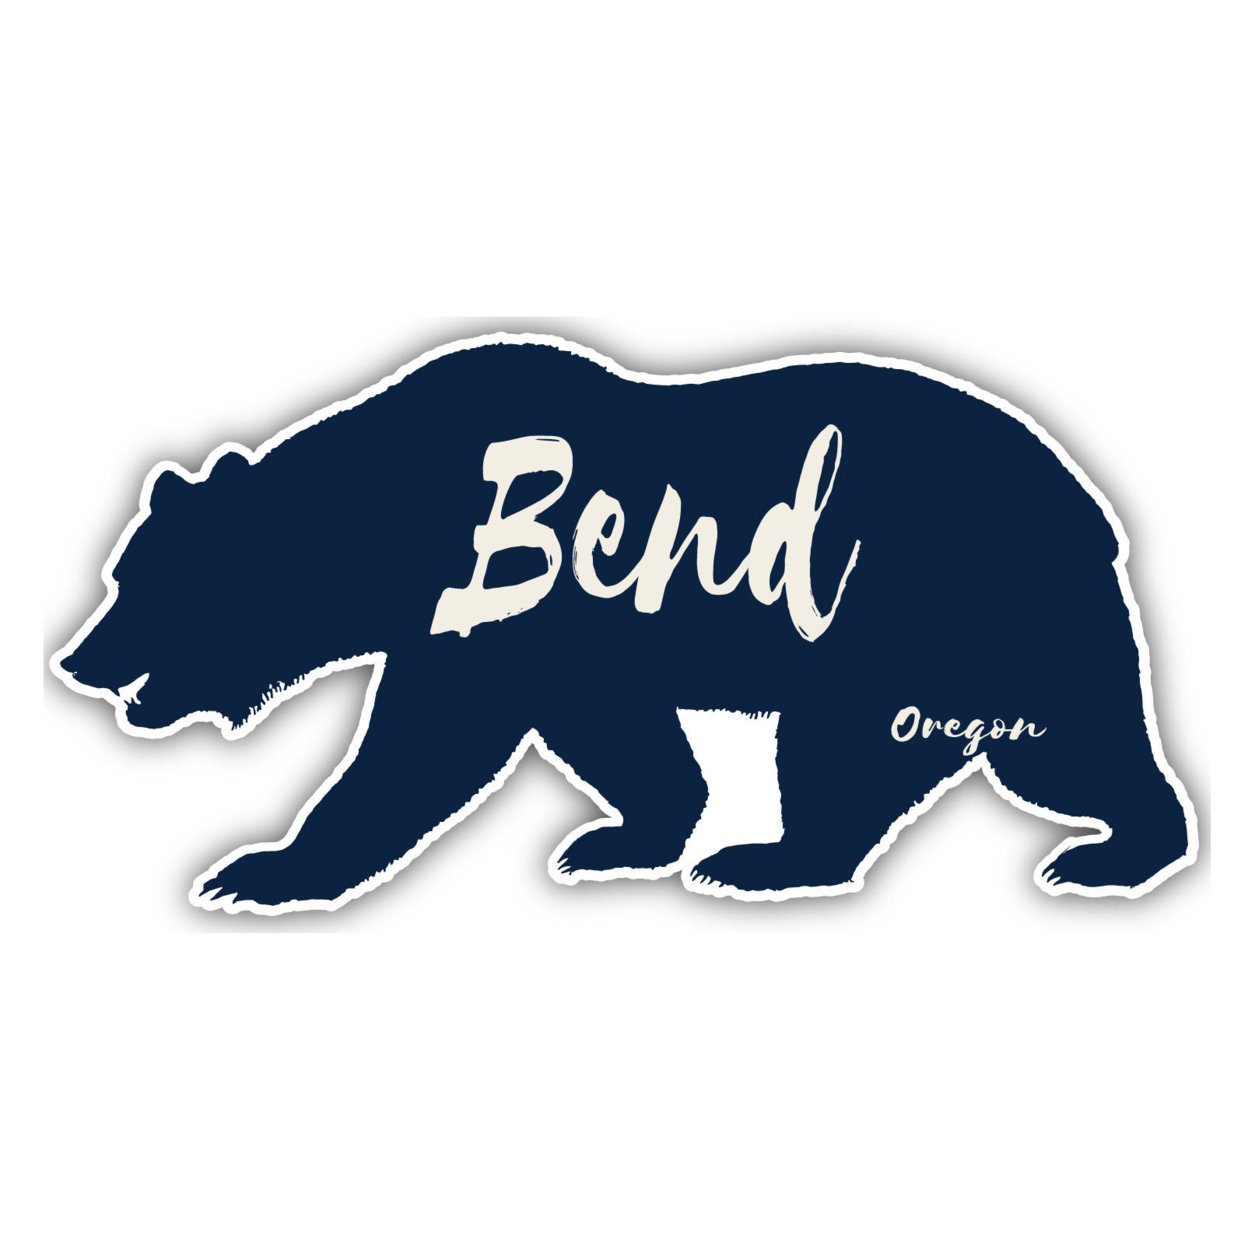 Bend Oregon Souvenir Decorative Stickers (Choose Theme And Size) - Single Unit, 10-Inch, Adventures Awaits